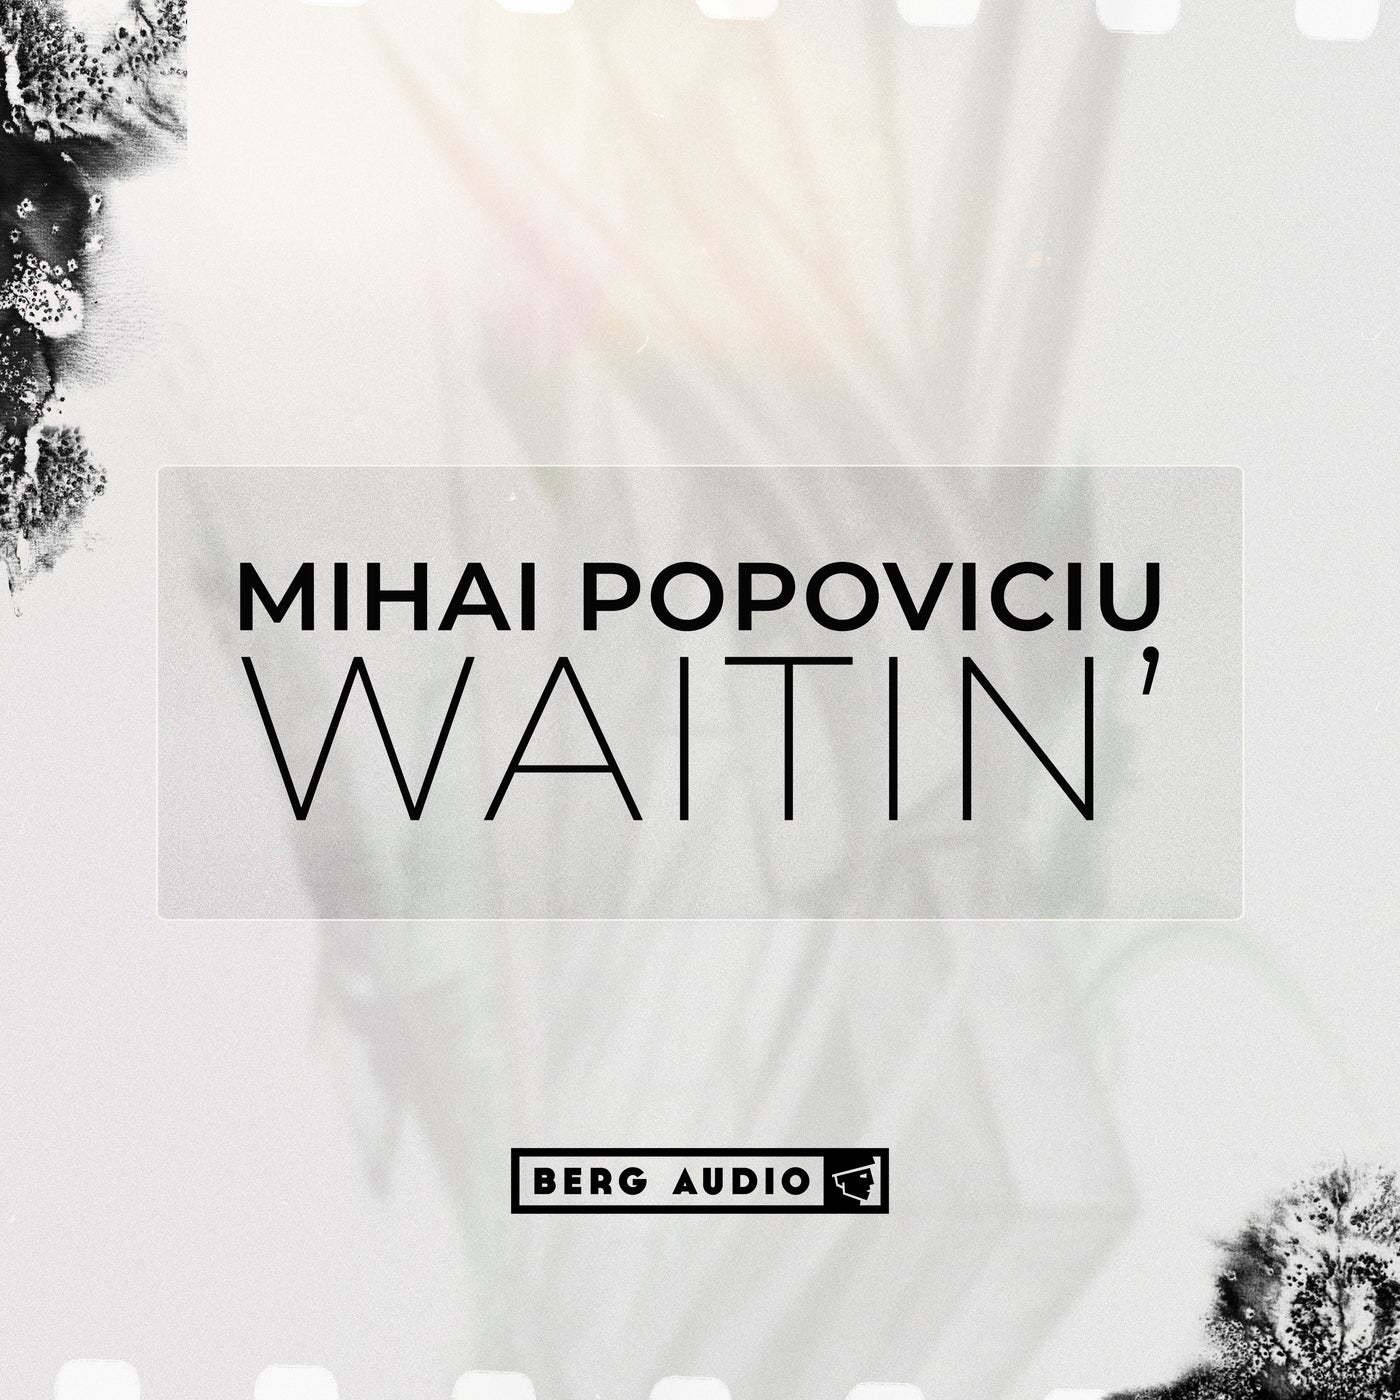 image cover: Mihai Popoviciu - Waitin' on Berg Audio